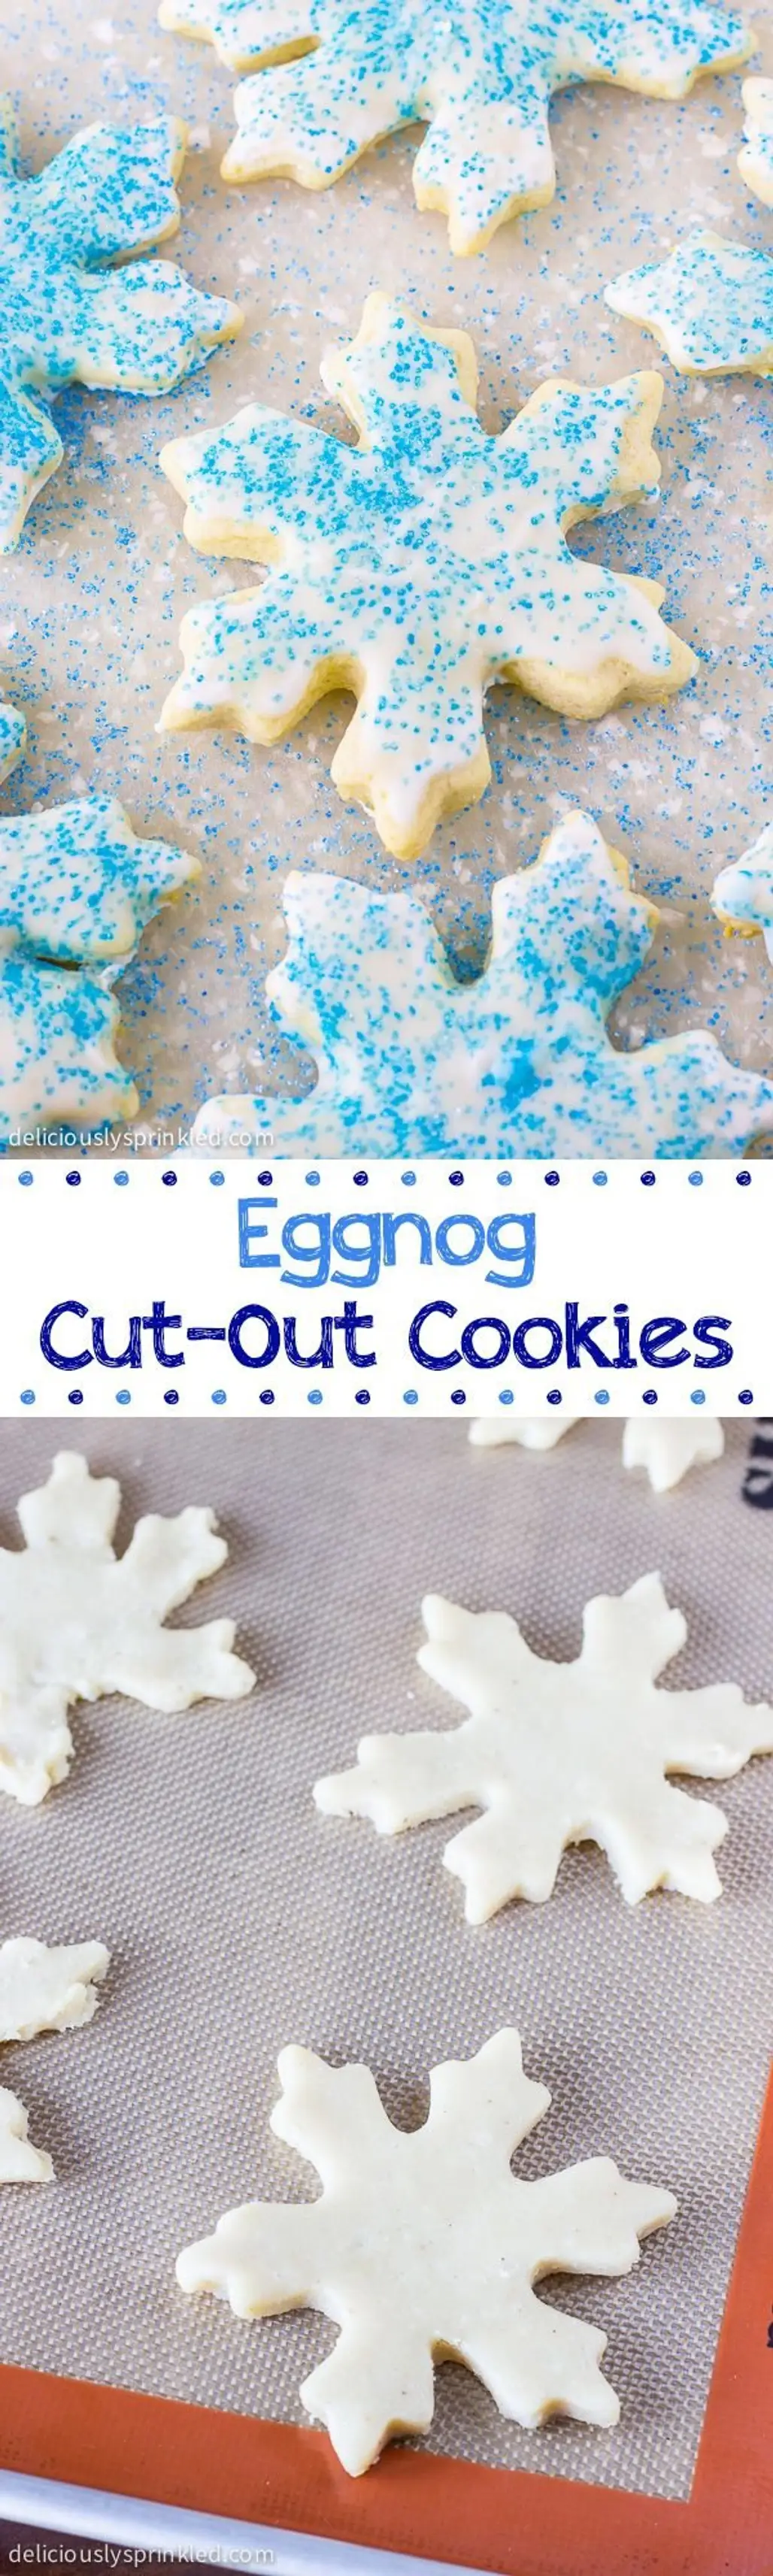 Eggnog-Cut-out-Cookies